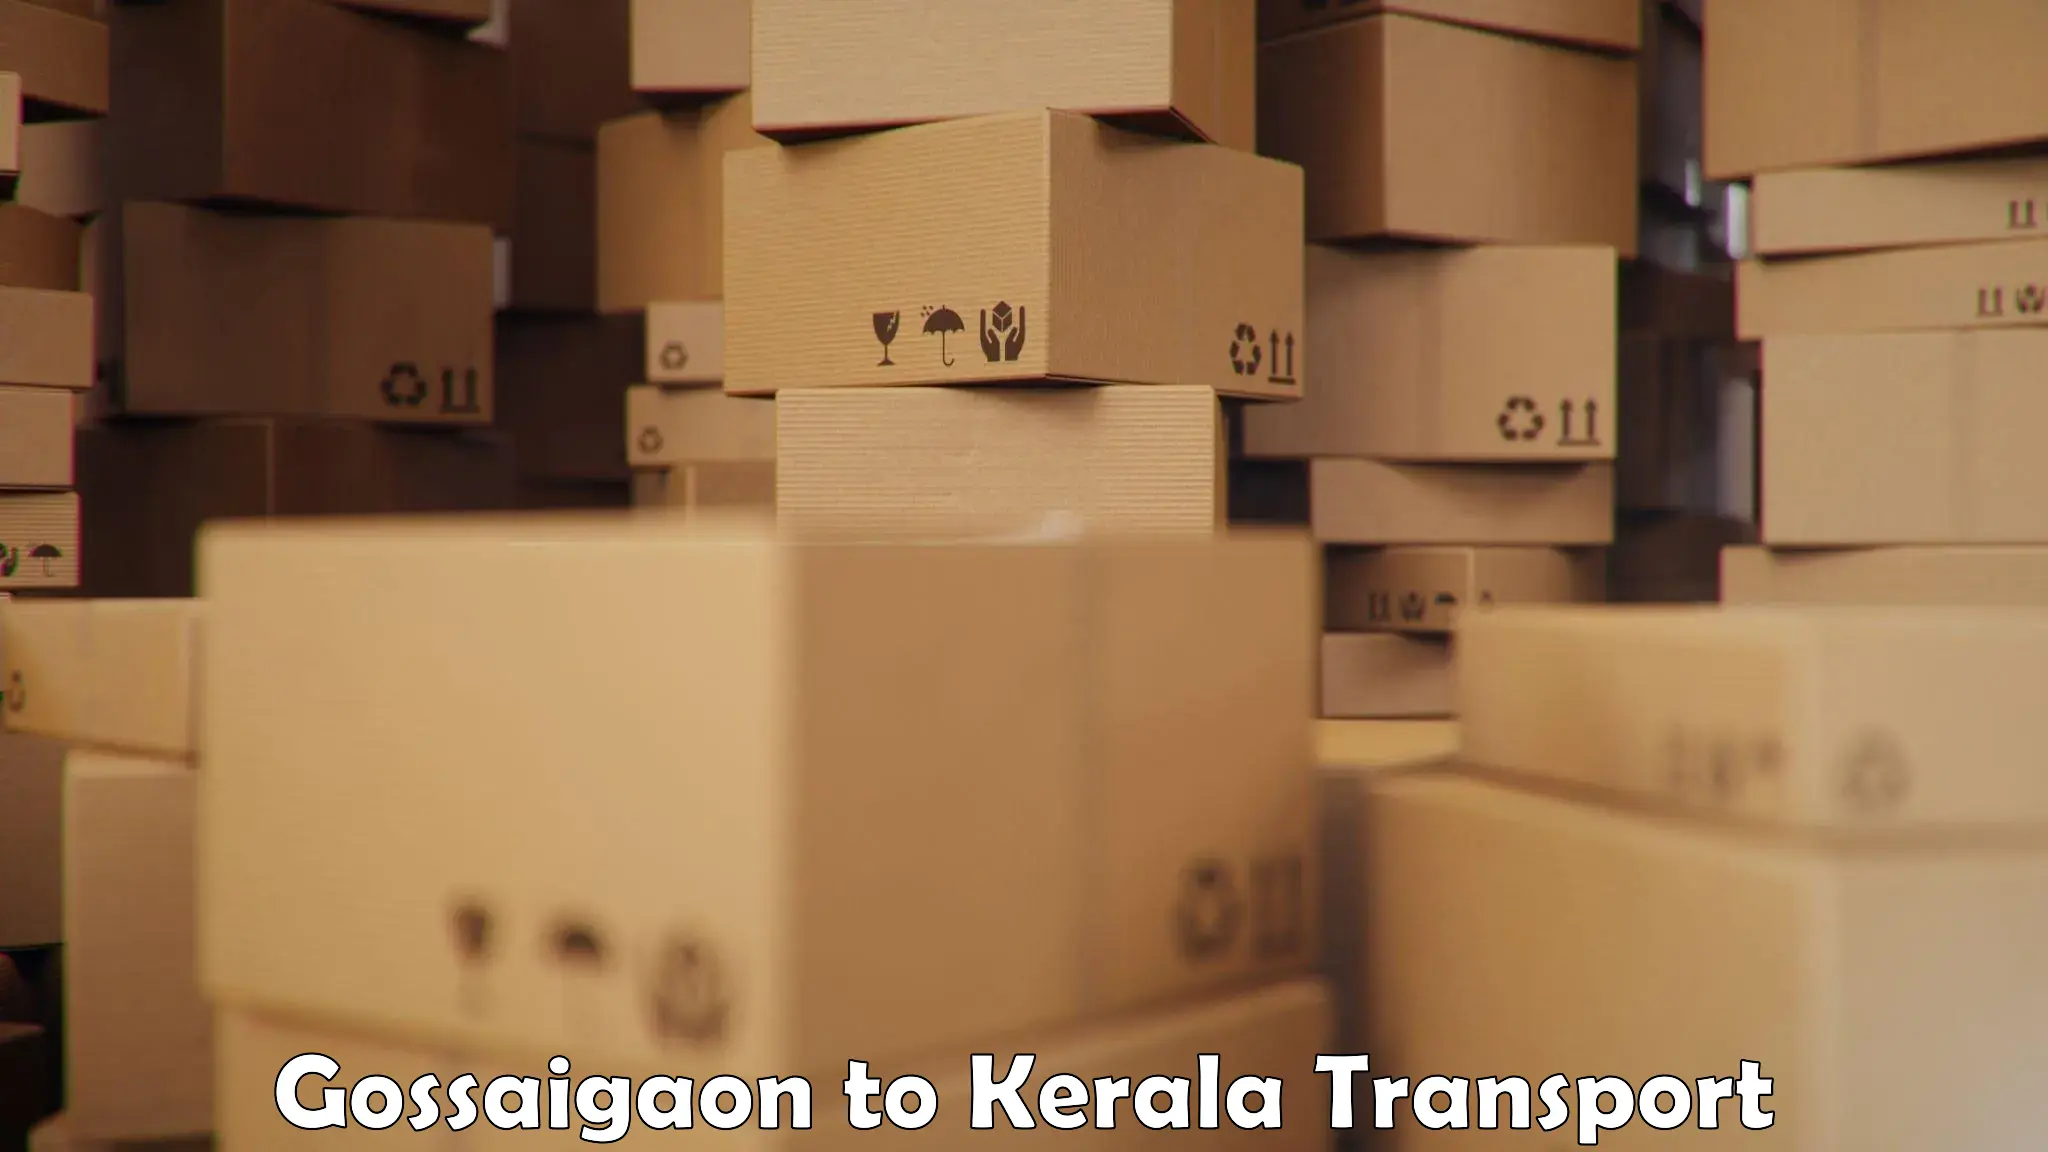 Shipping partner Gossaigaon to Kerala